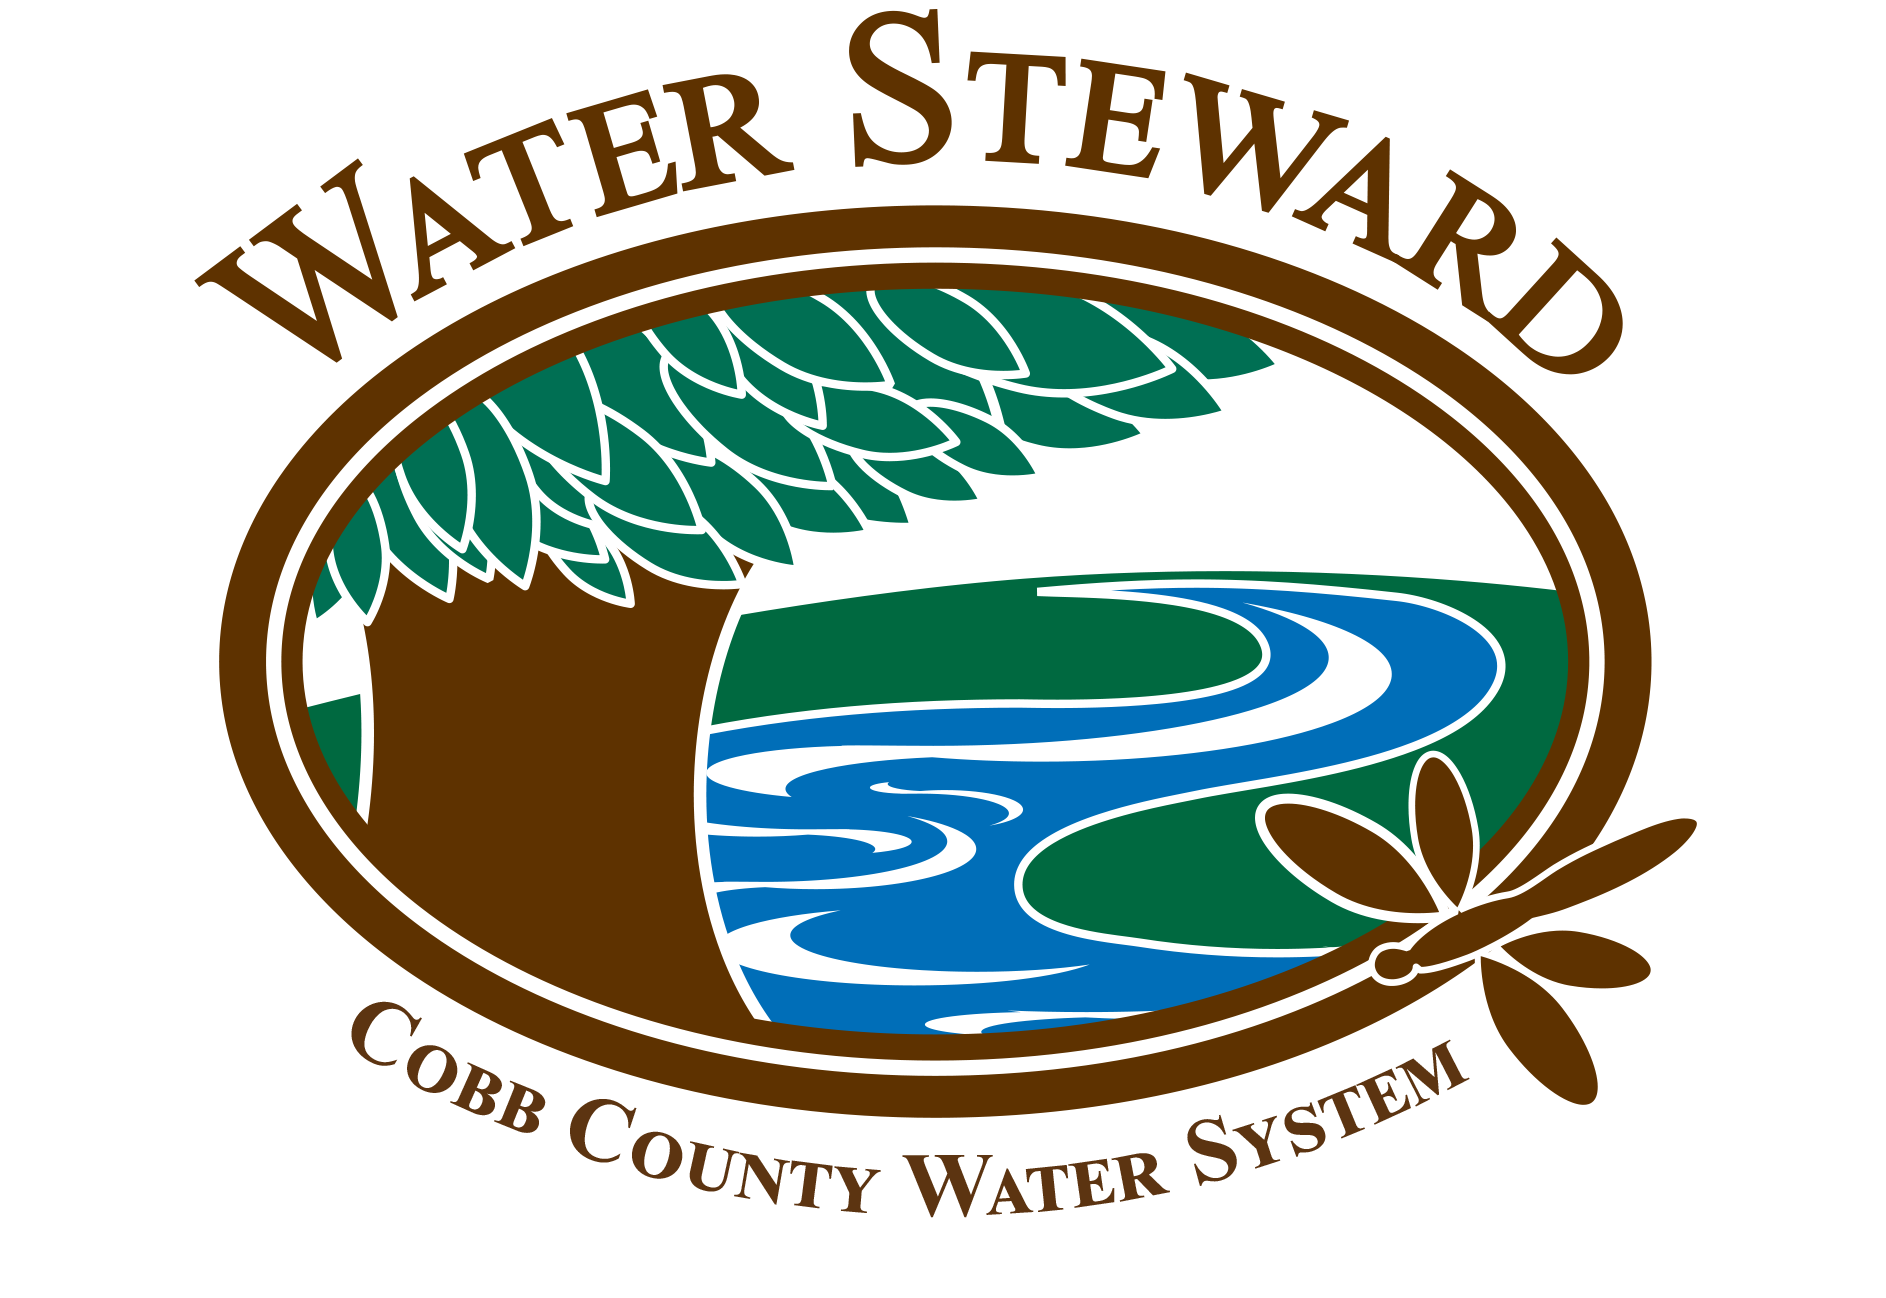 Cobb County Watershed Stewardship Program